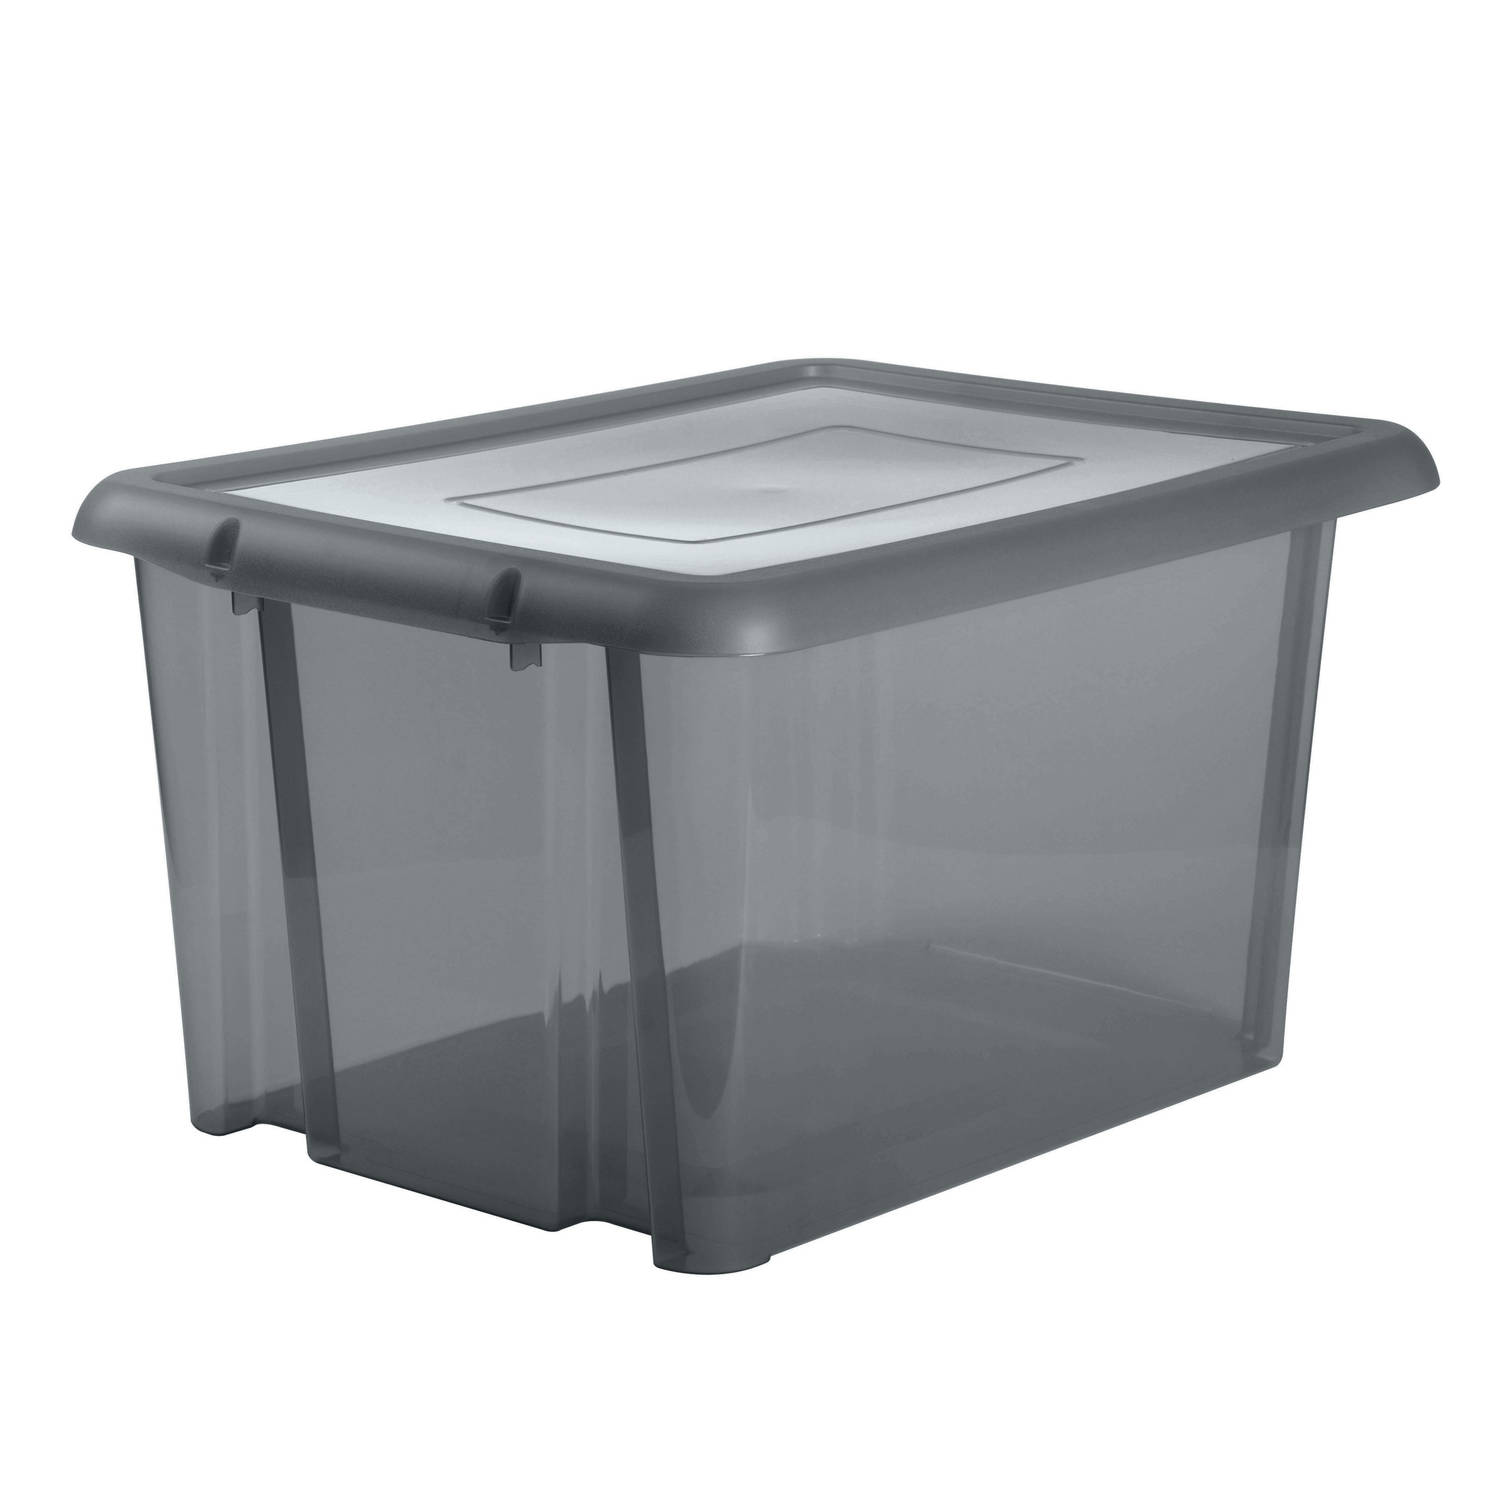 Kunststof opbergbox/opbergdoos grijs transparant L65 x B50 x H36 cm stapelbaar - Opbergbox